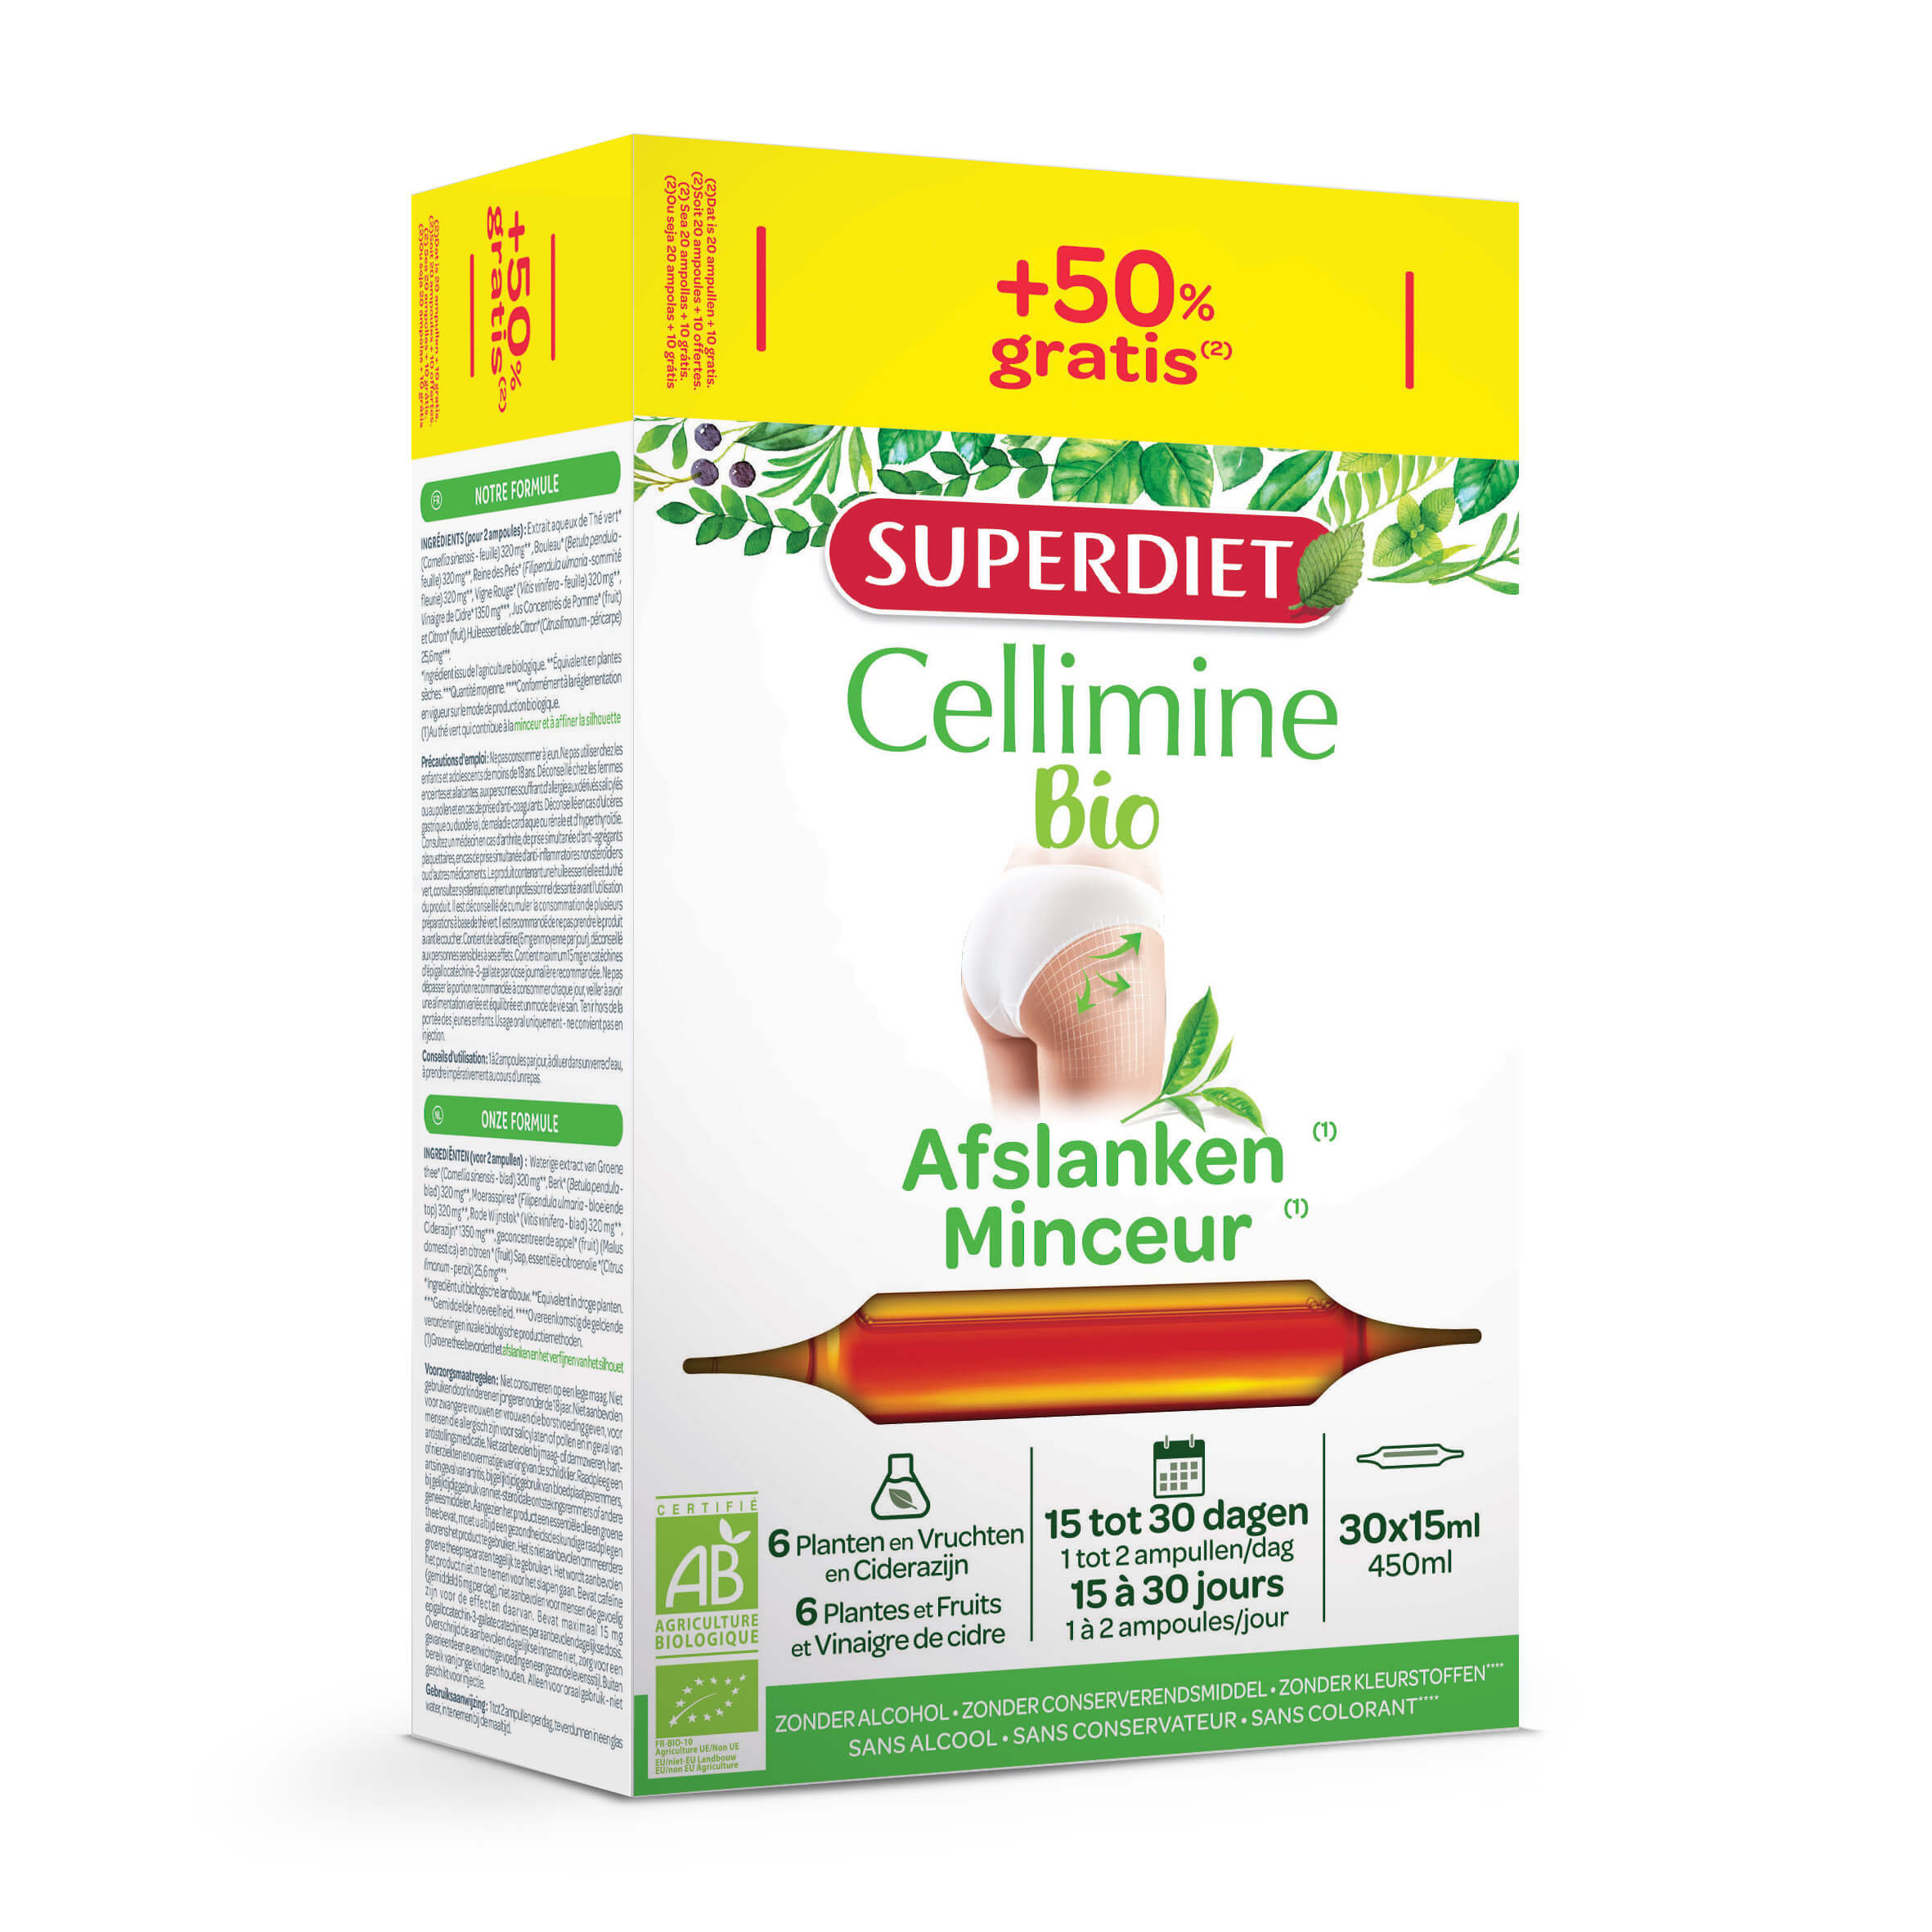 Super Diet Cellimine afslanken bio 20x15ml +50% gratis